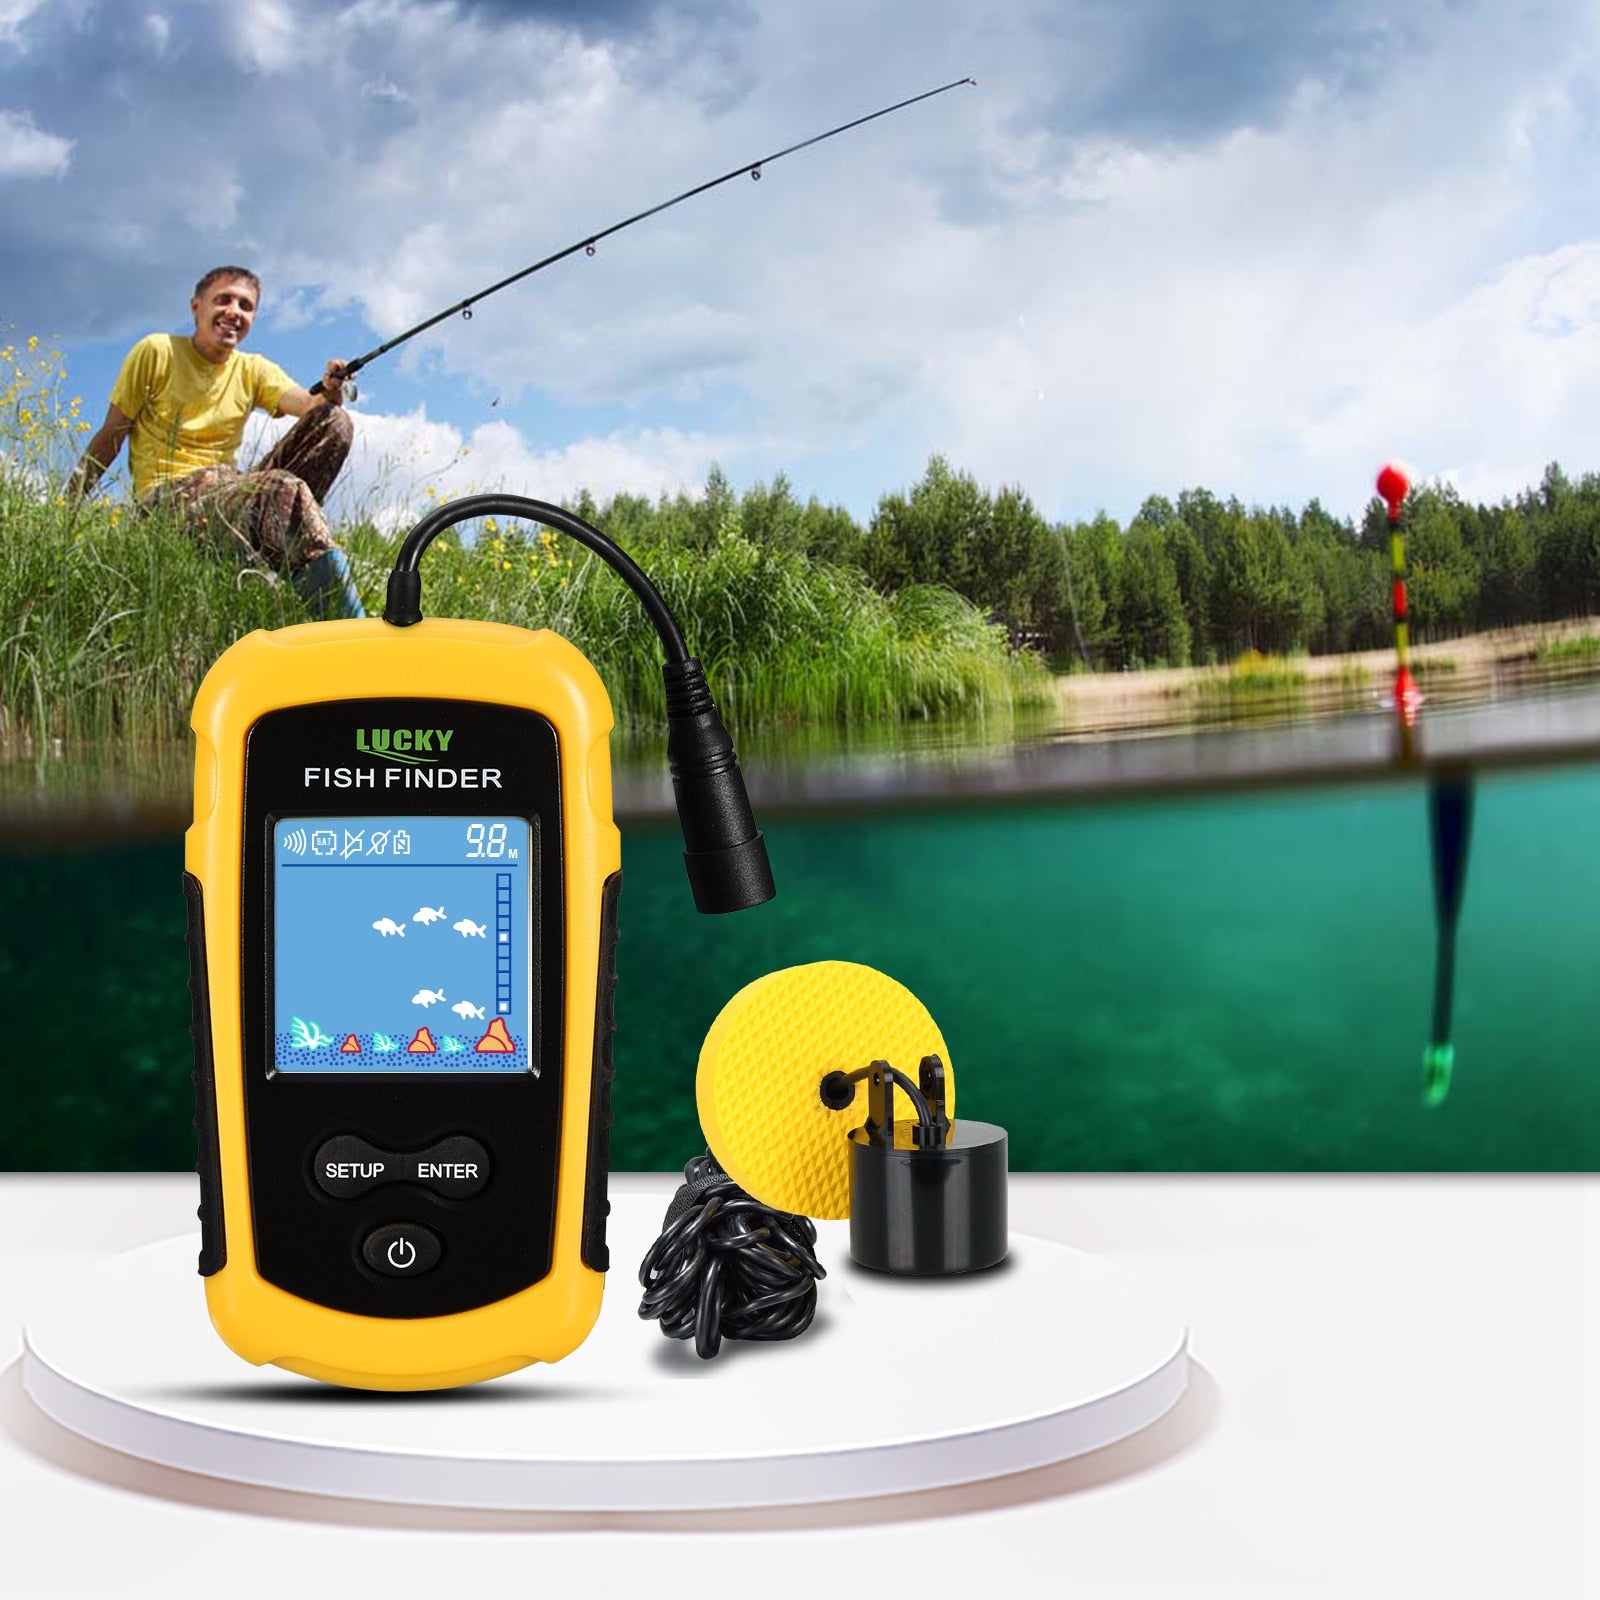 Portable Sonar Fish Finders - Alarm & Transducer for Efficient